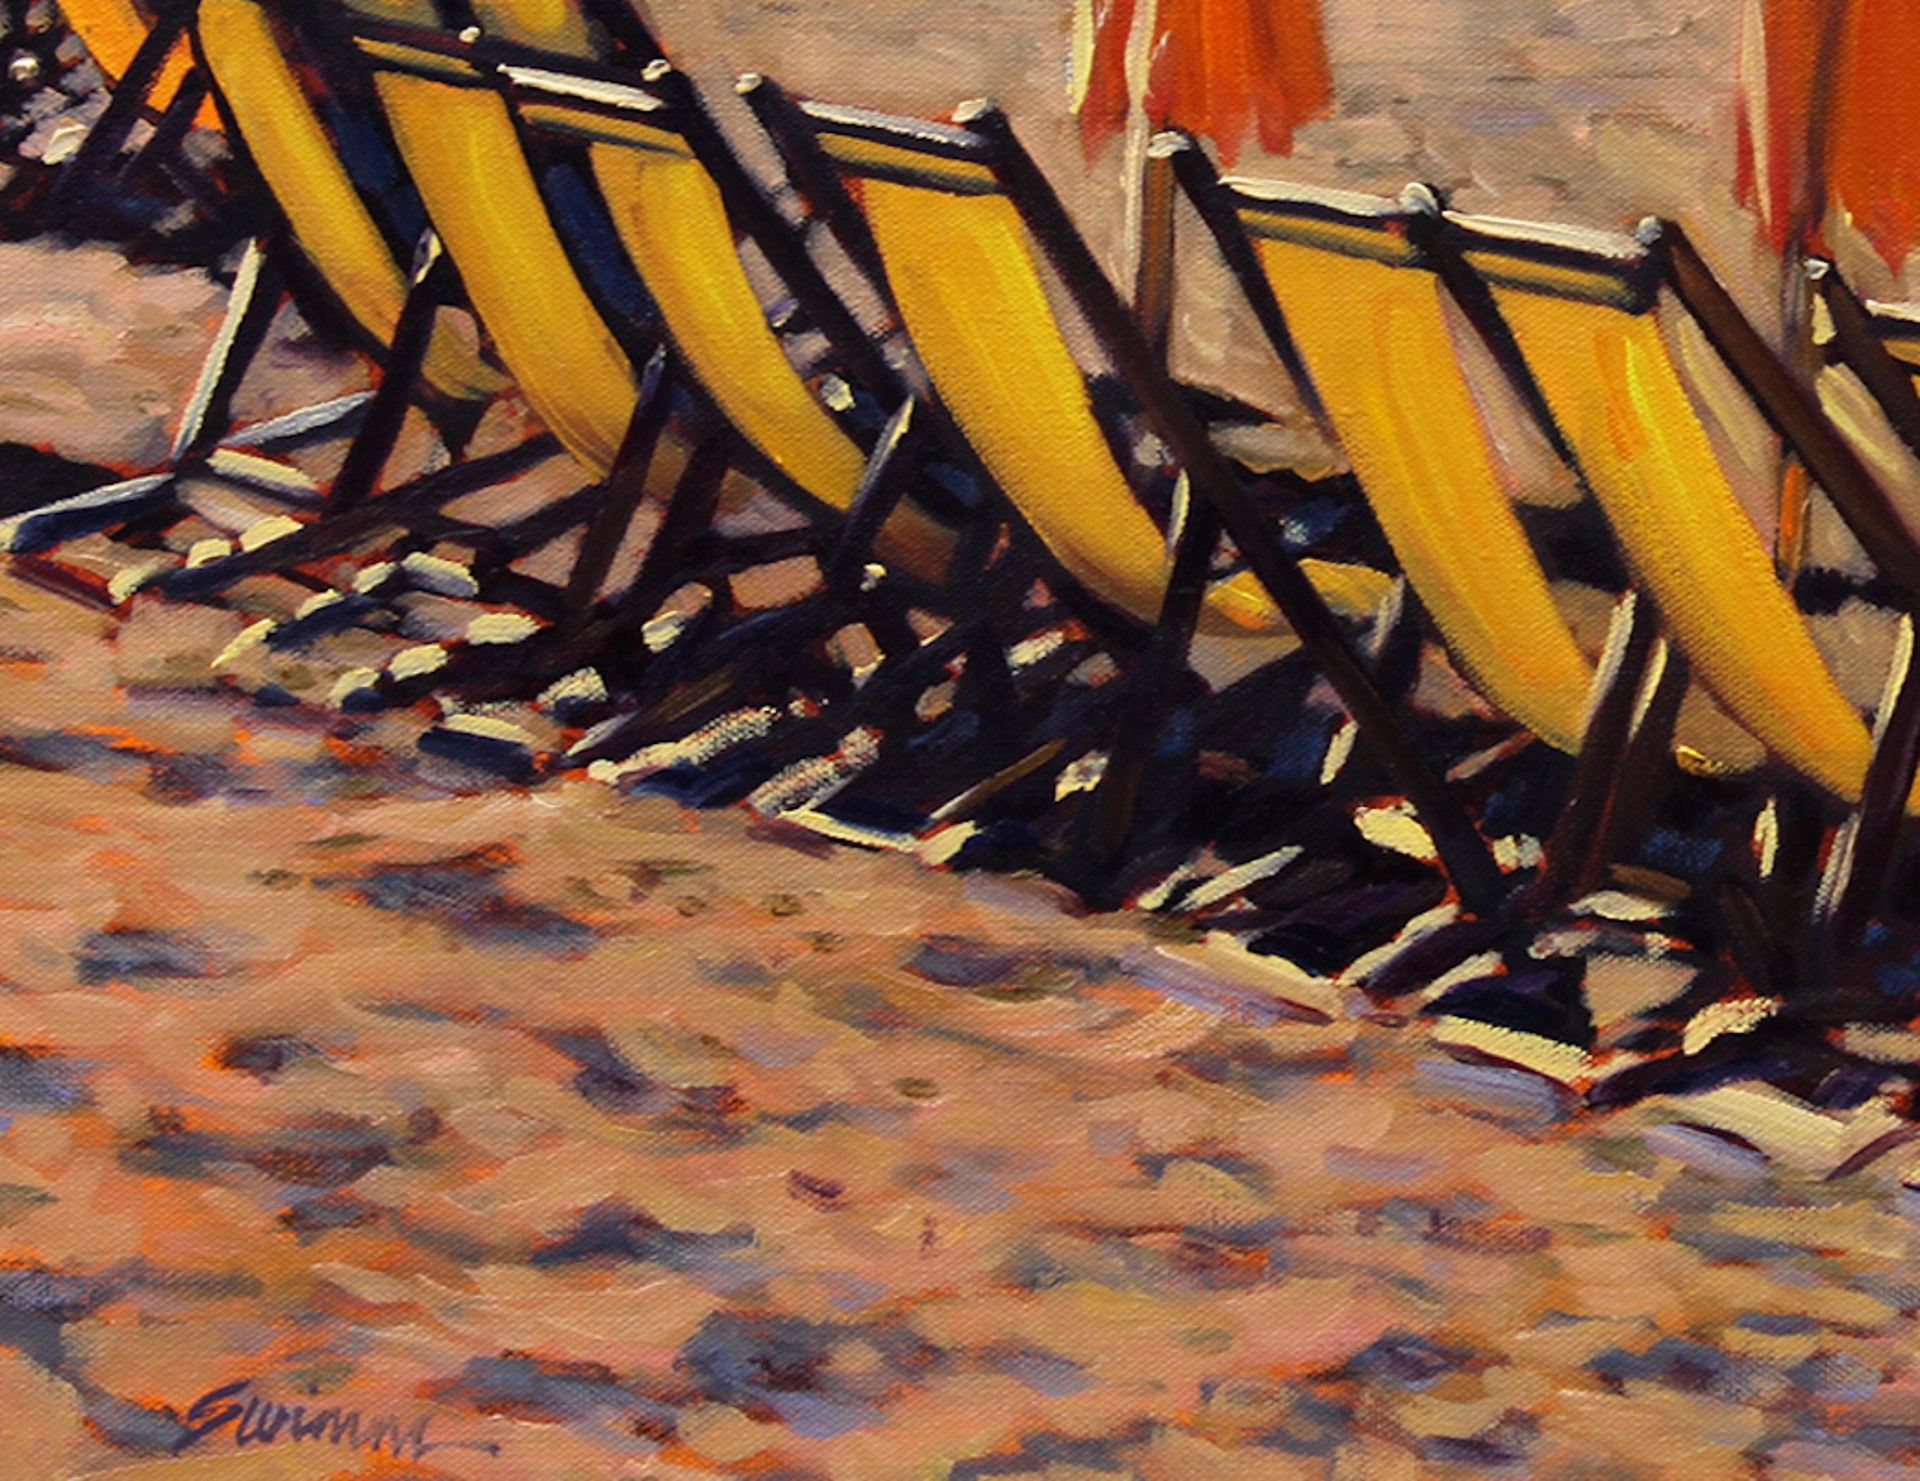 Yellow Chairs of Positano by Tom Swimm